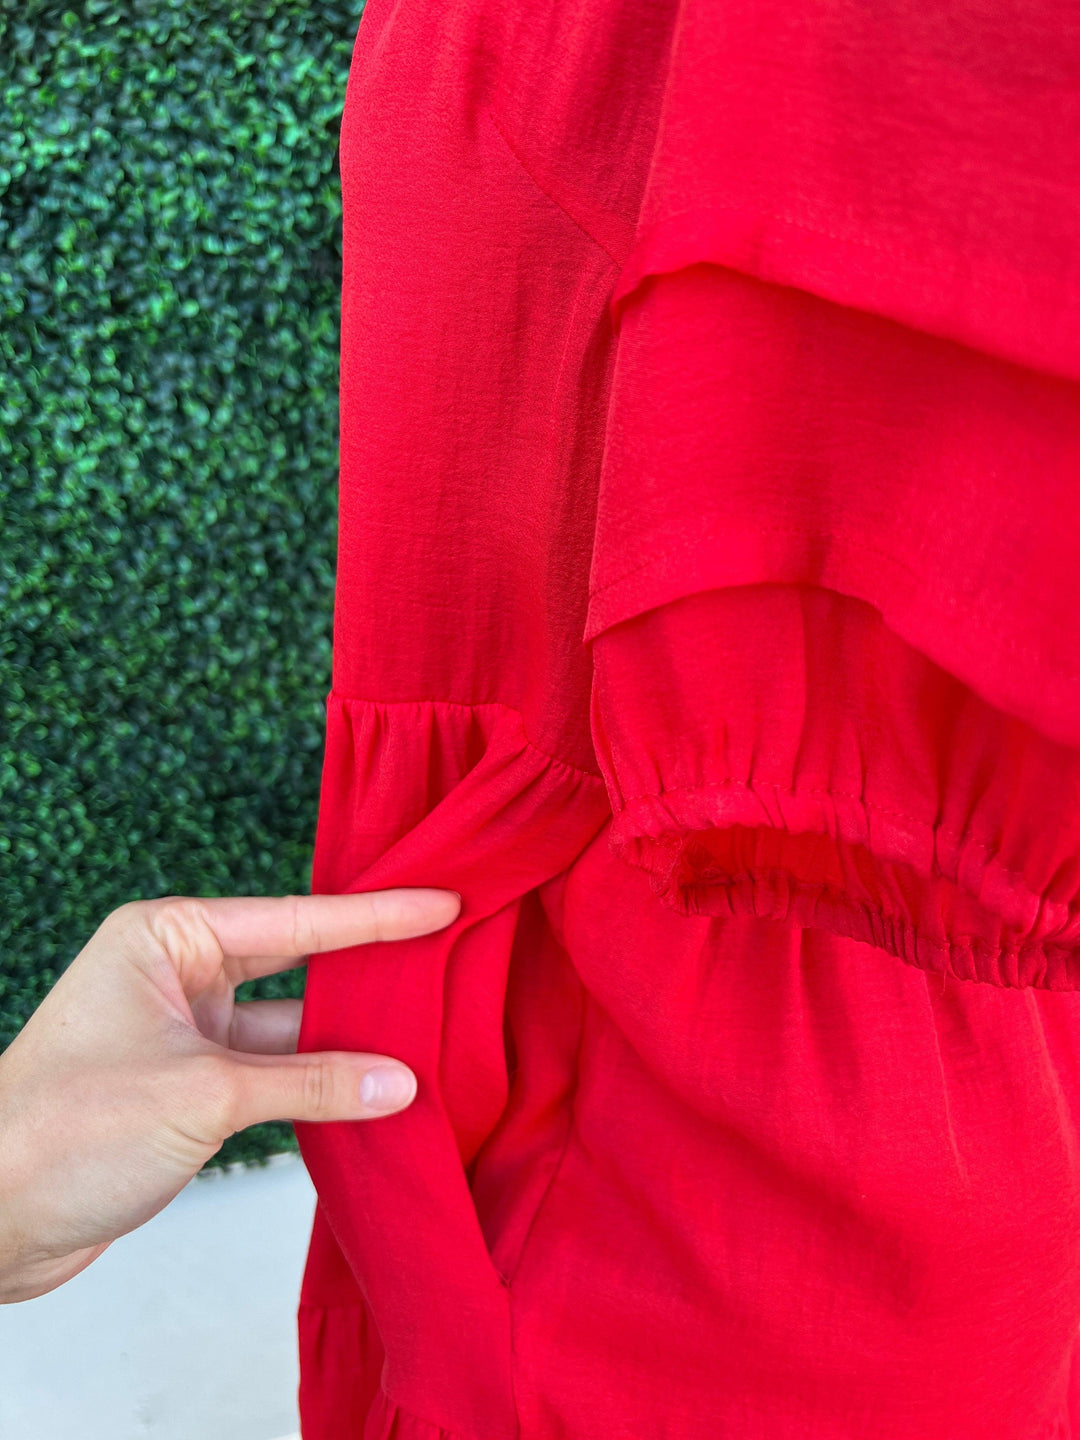 Jade joy joy brand red dress boutique womens clothing online houston 